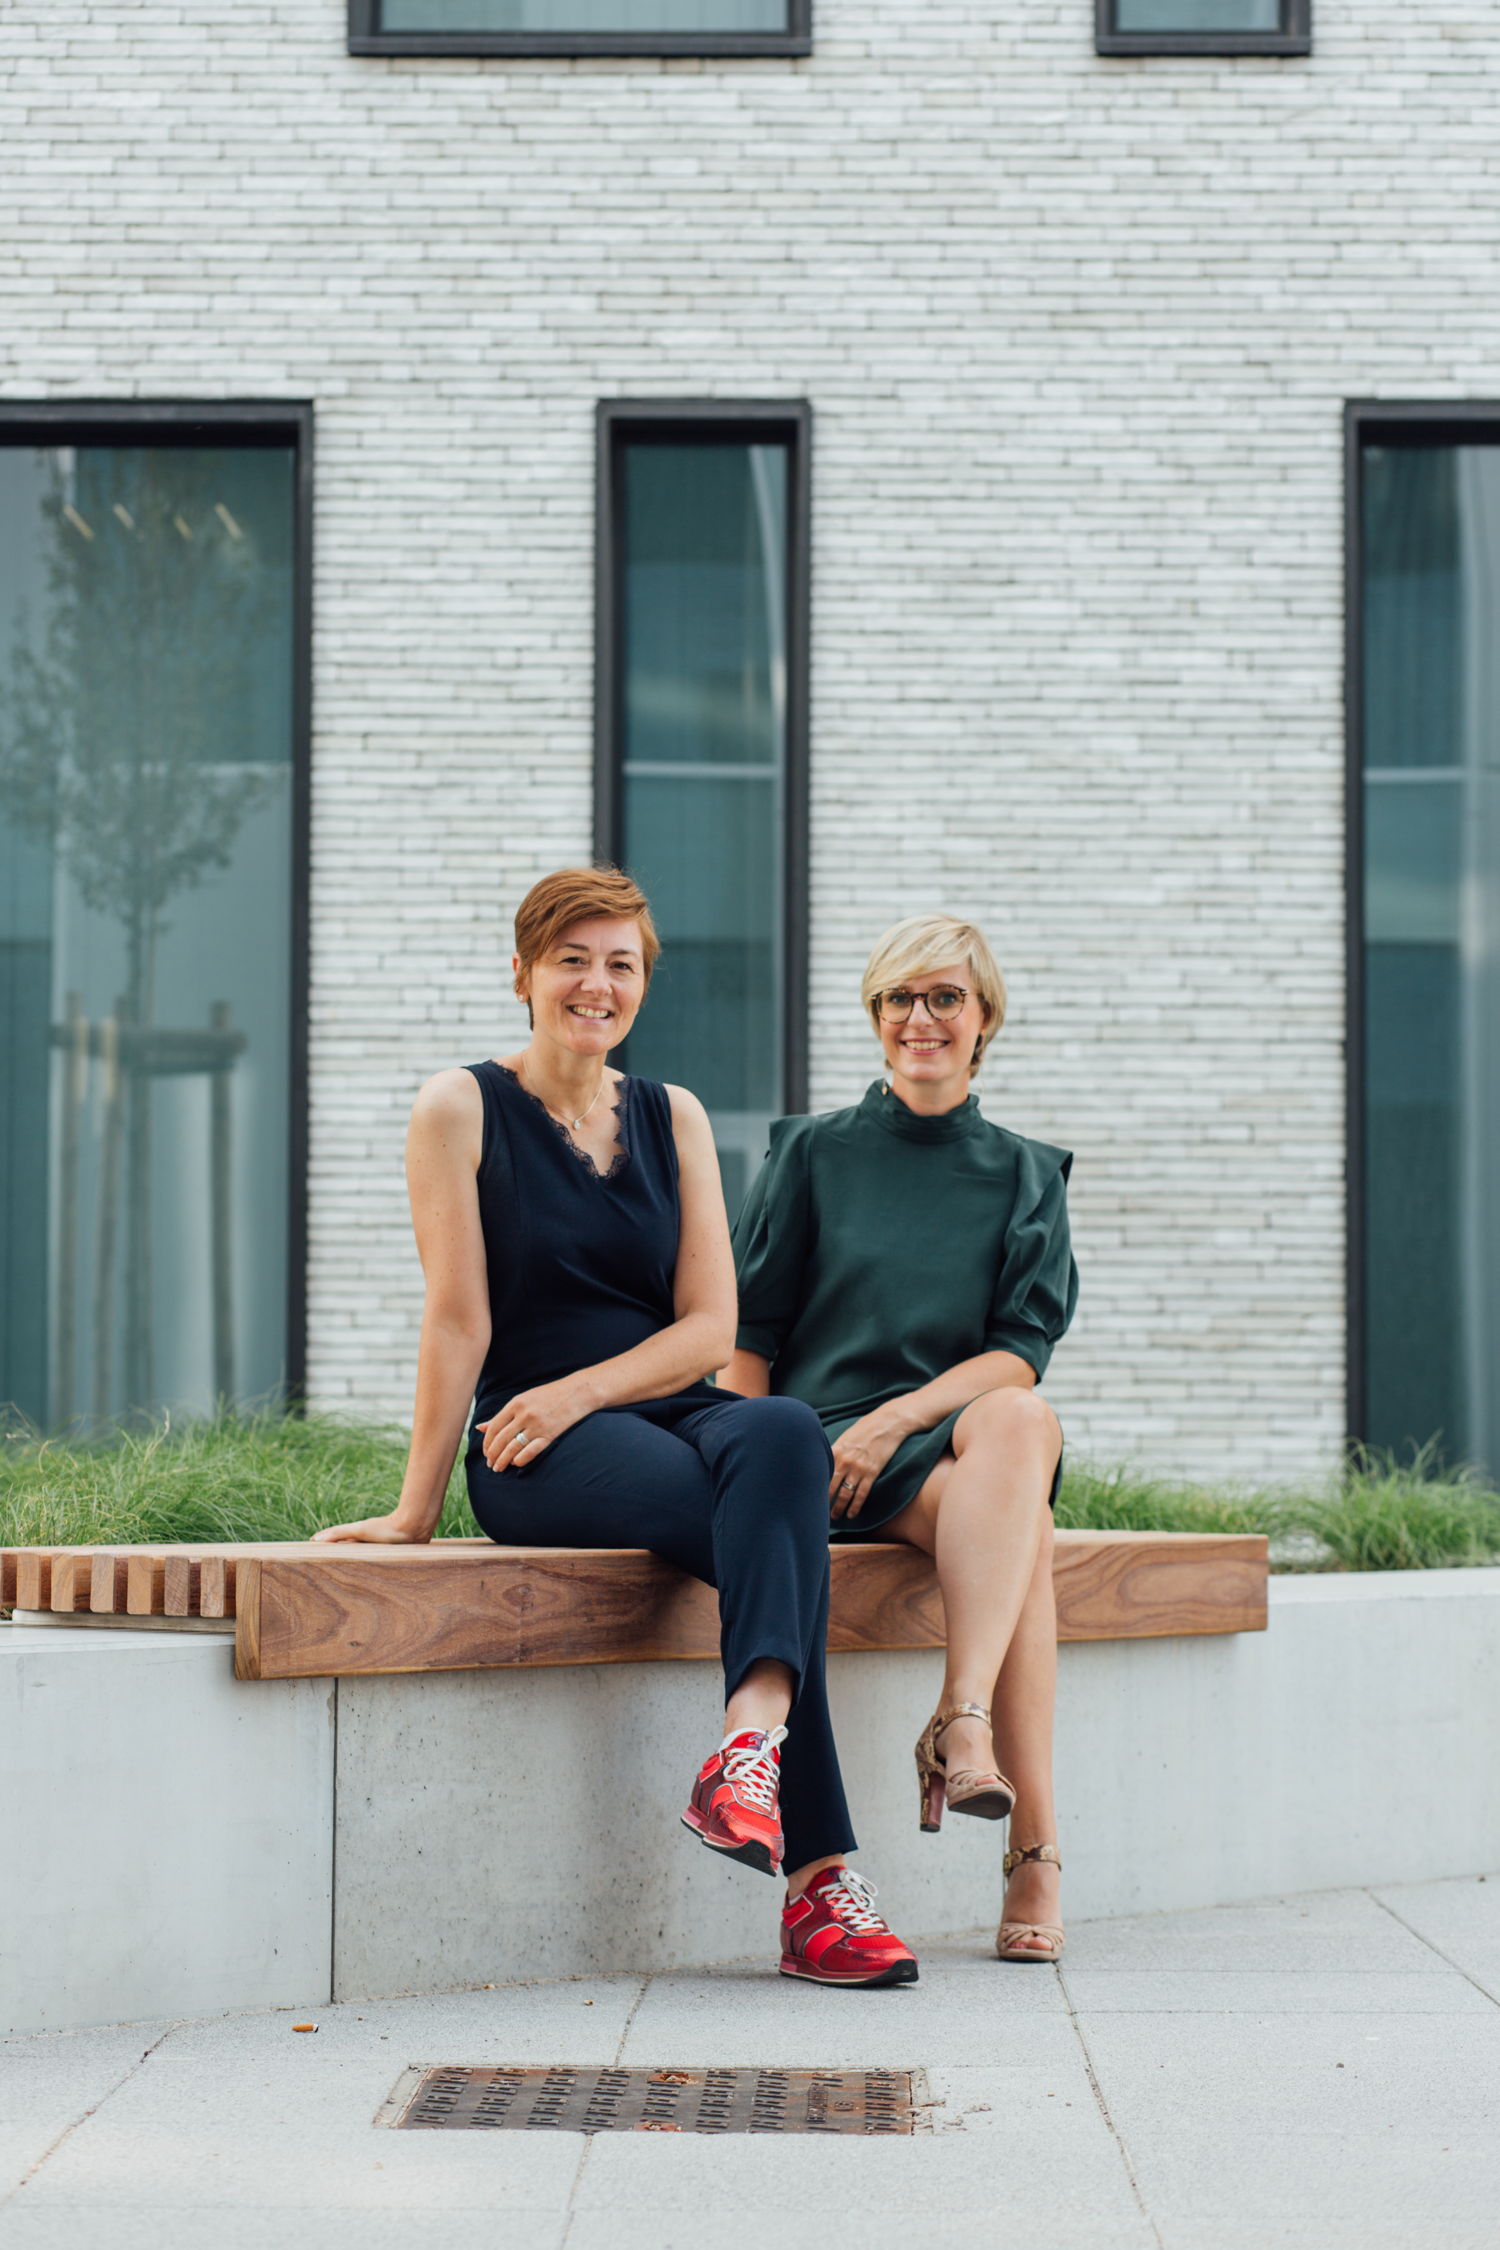 Elke Struys & Eline Grouwels, founders Umital